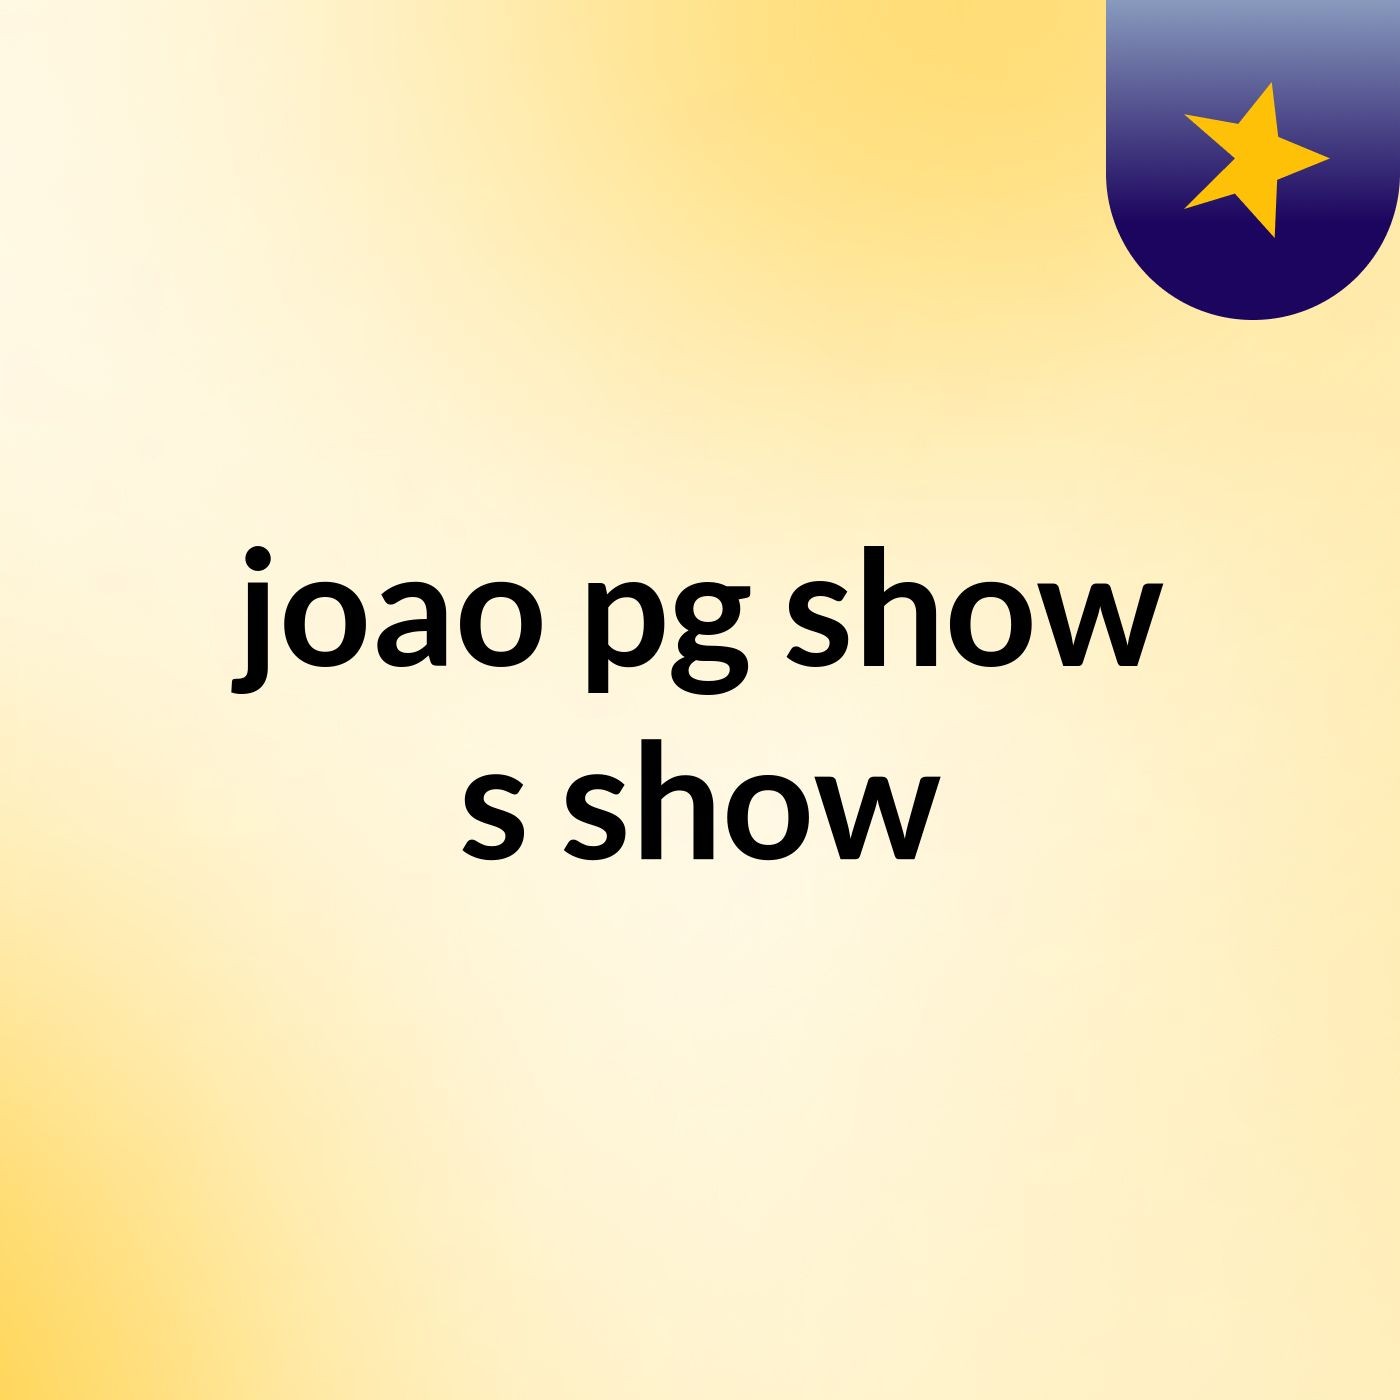 joao pg show's show